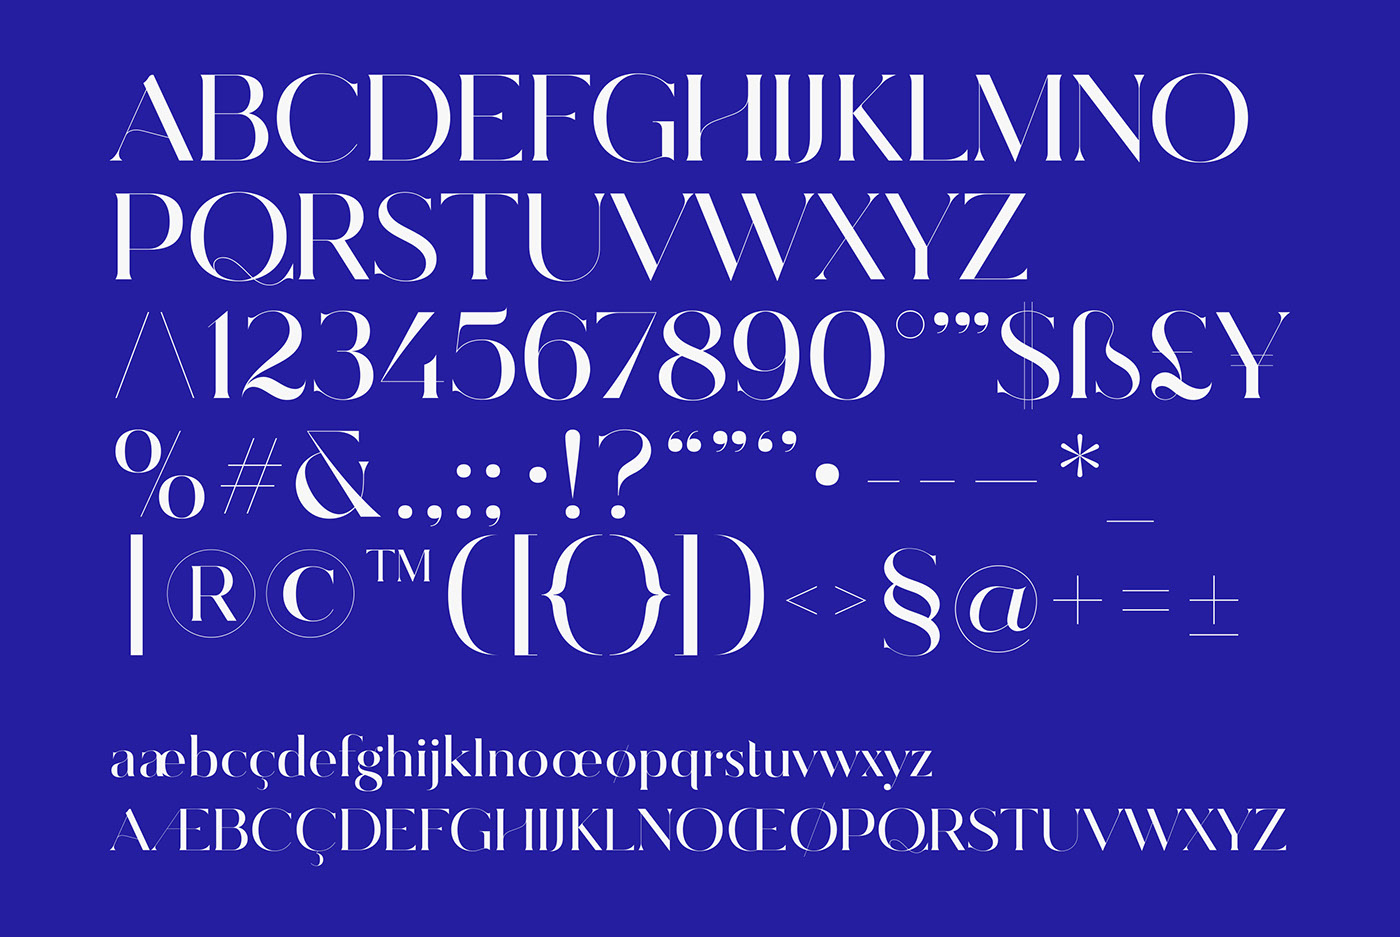 Typeface quainton hypefortype serif font bespoke modern Classic